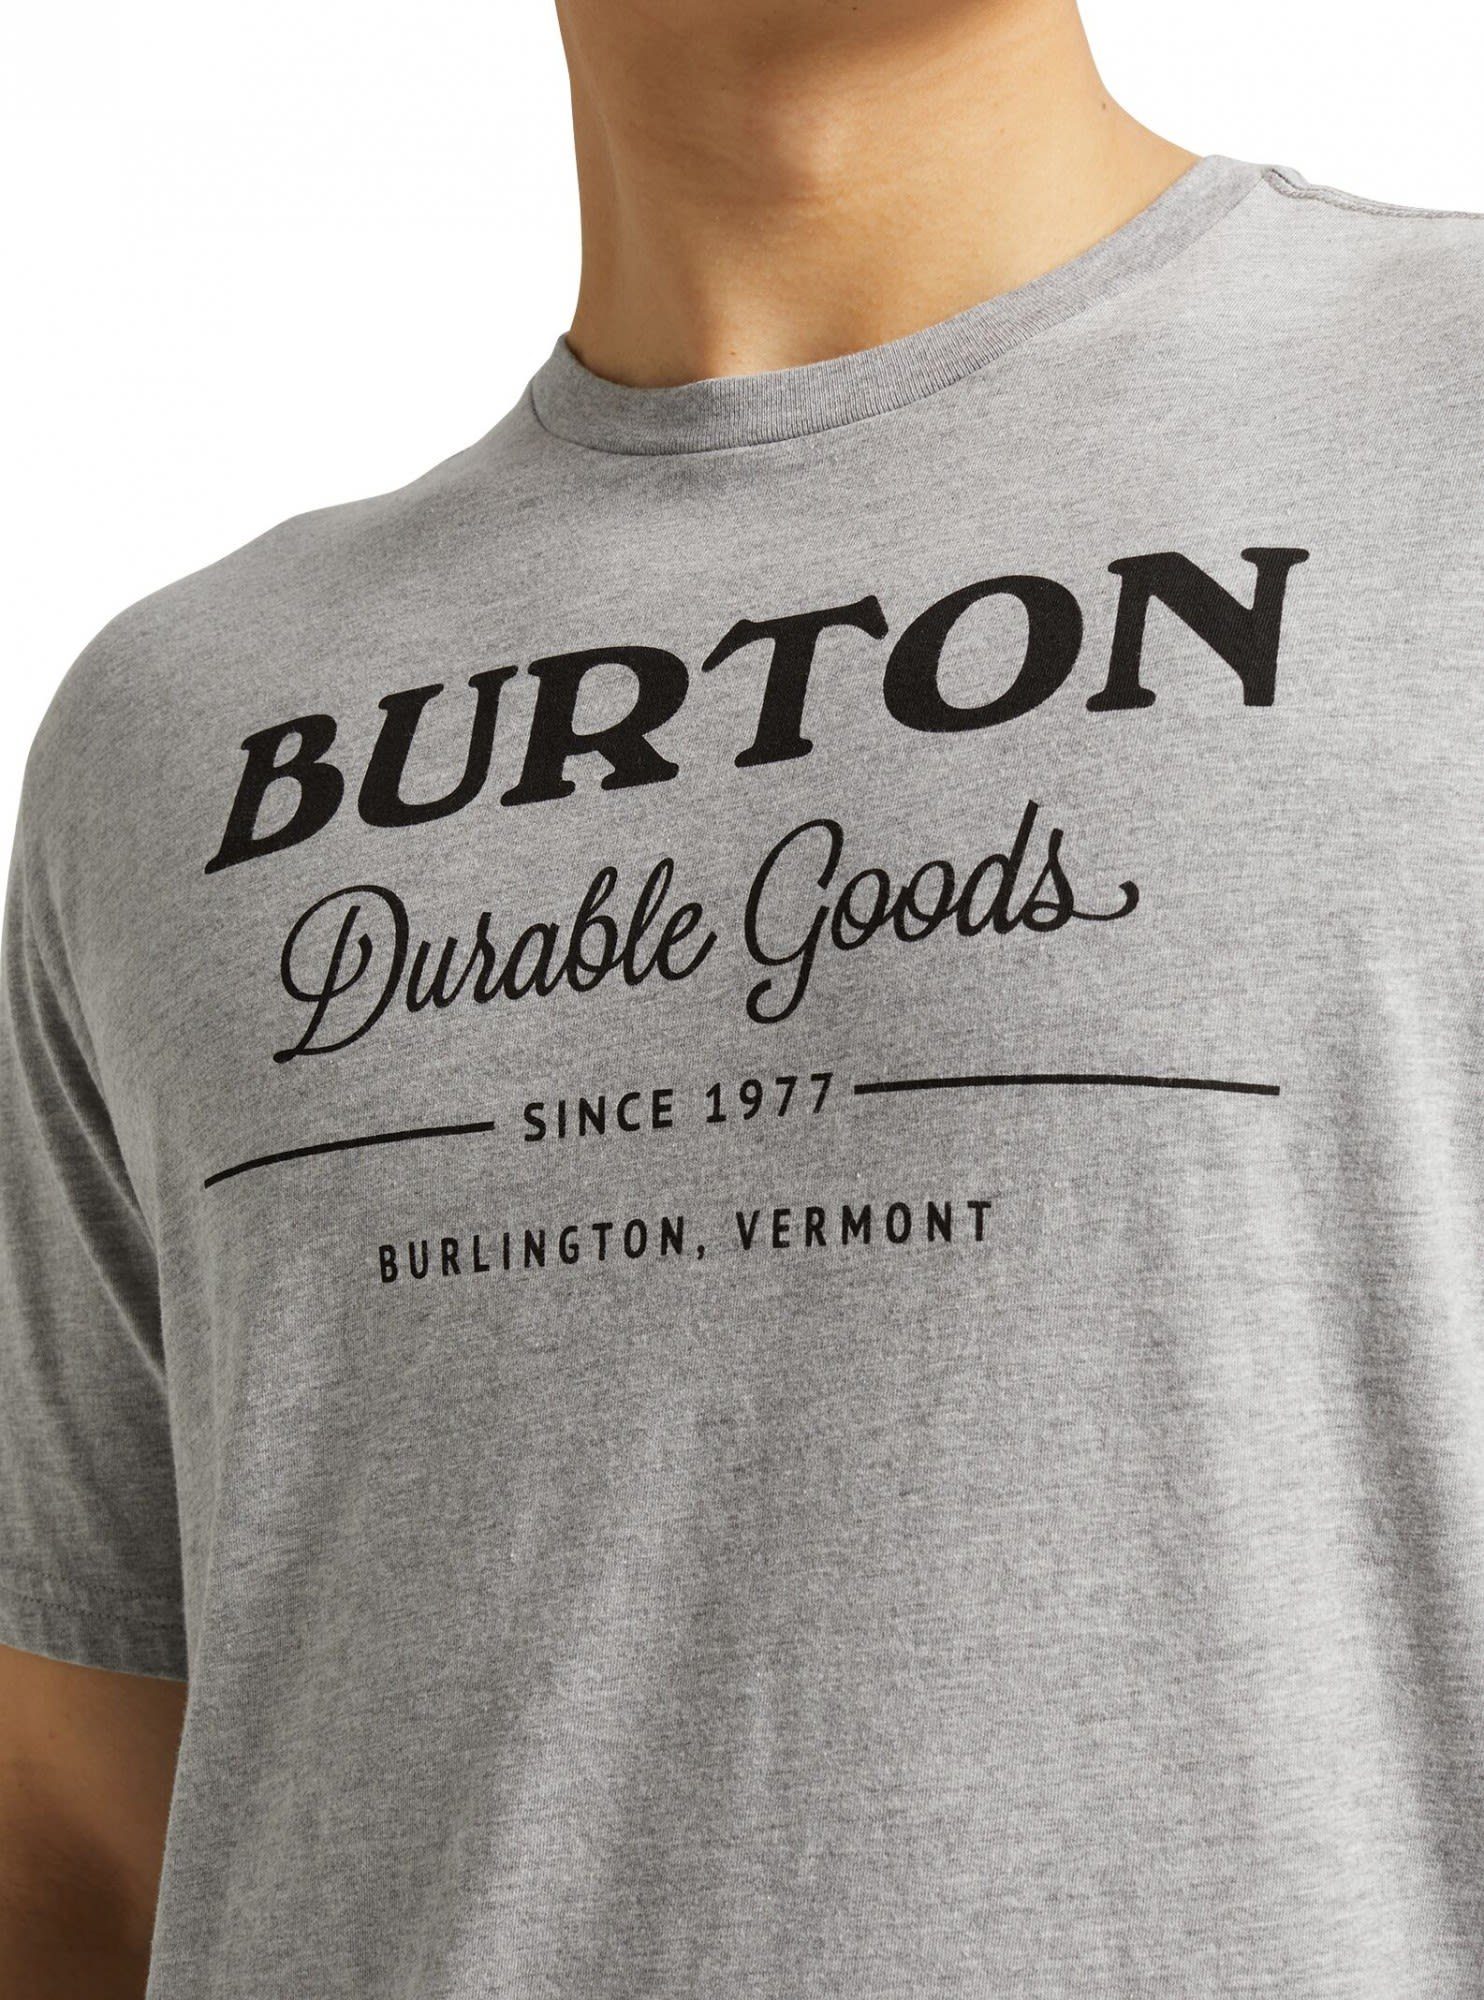 M Goods Mb Shortsleeve Gray Heather Durable Burton T-Shirt T-shirt Burton